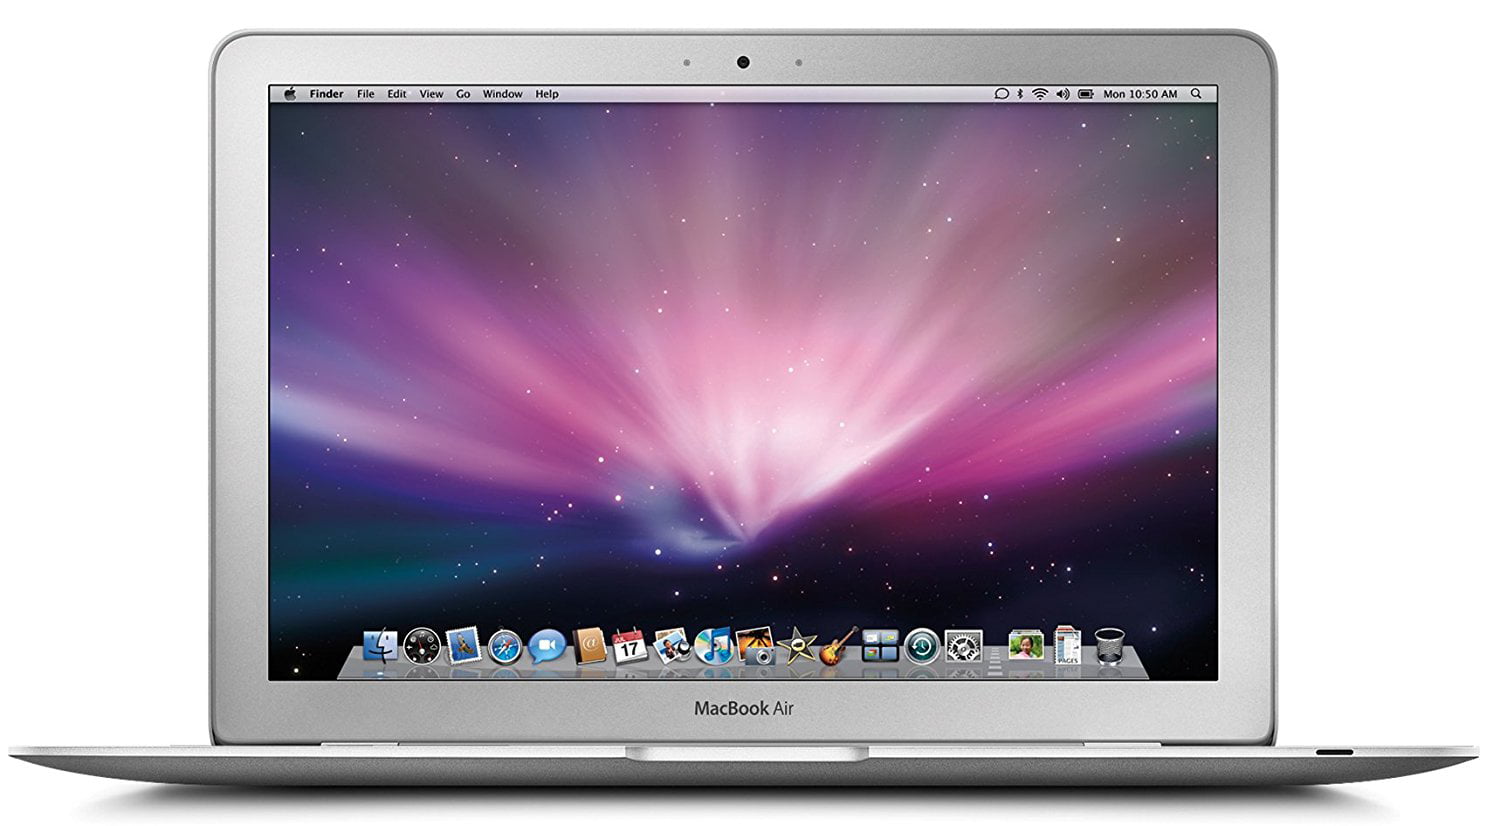 StartAllBack 3.6.10 download the new for apple